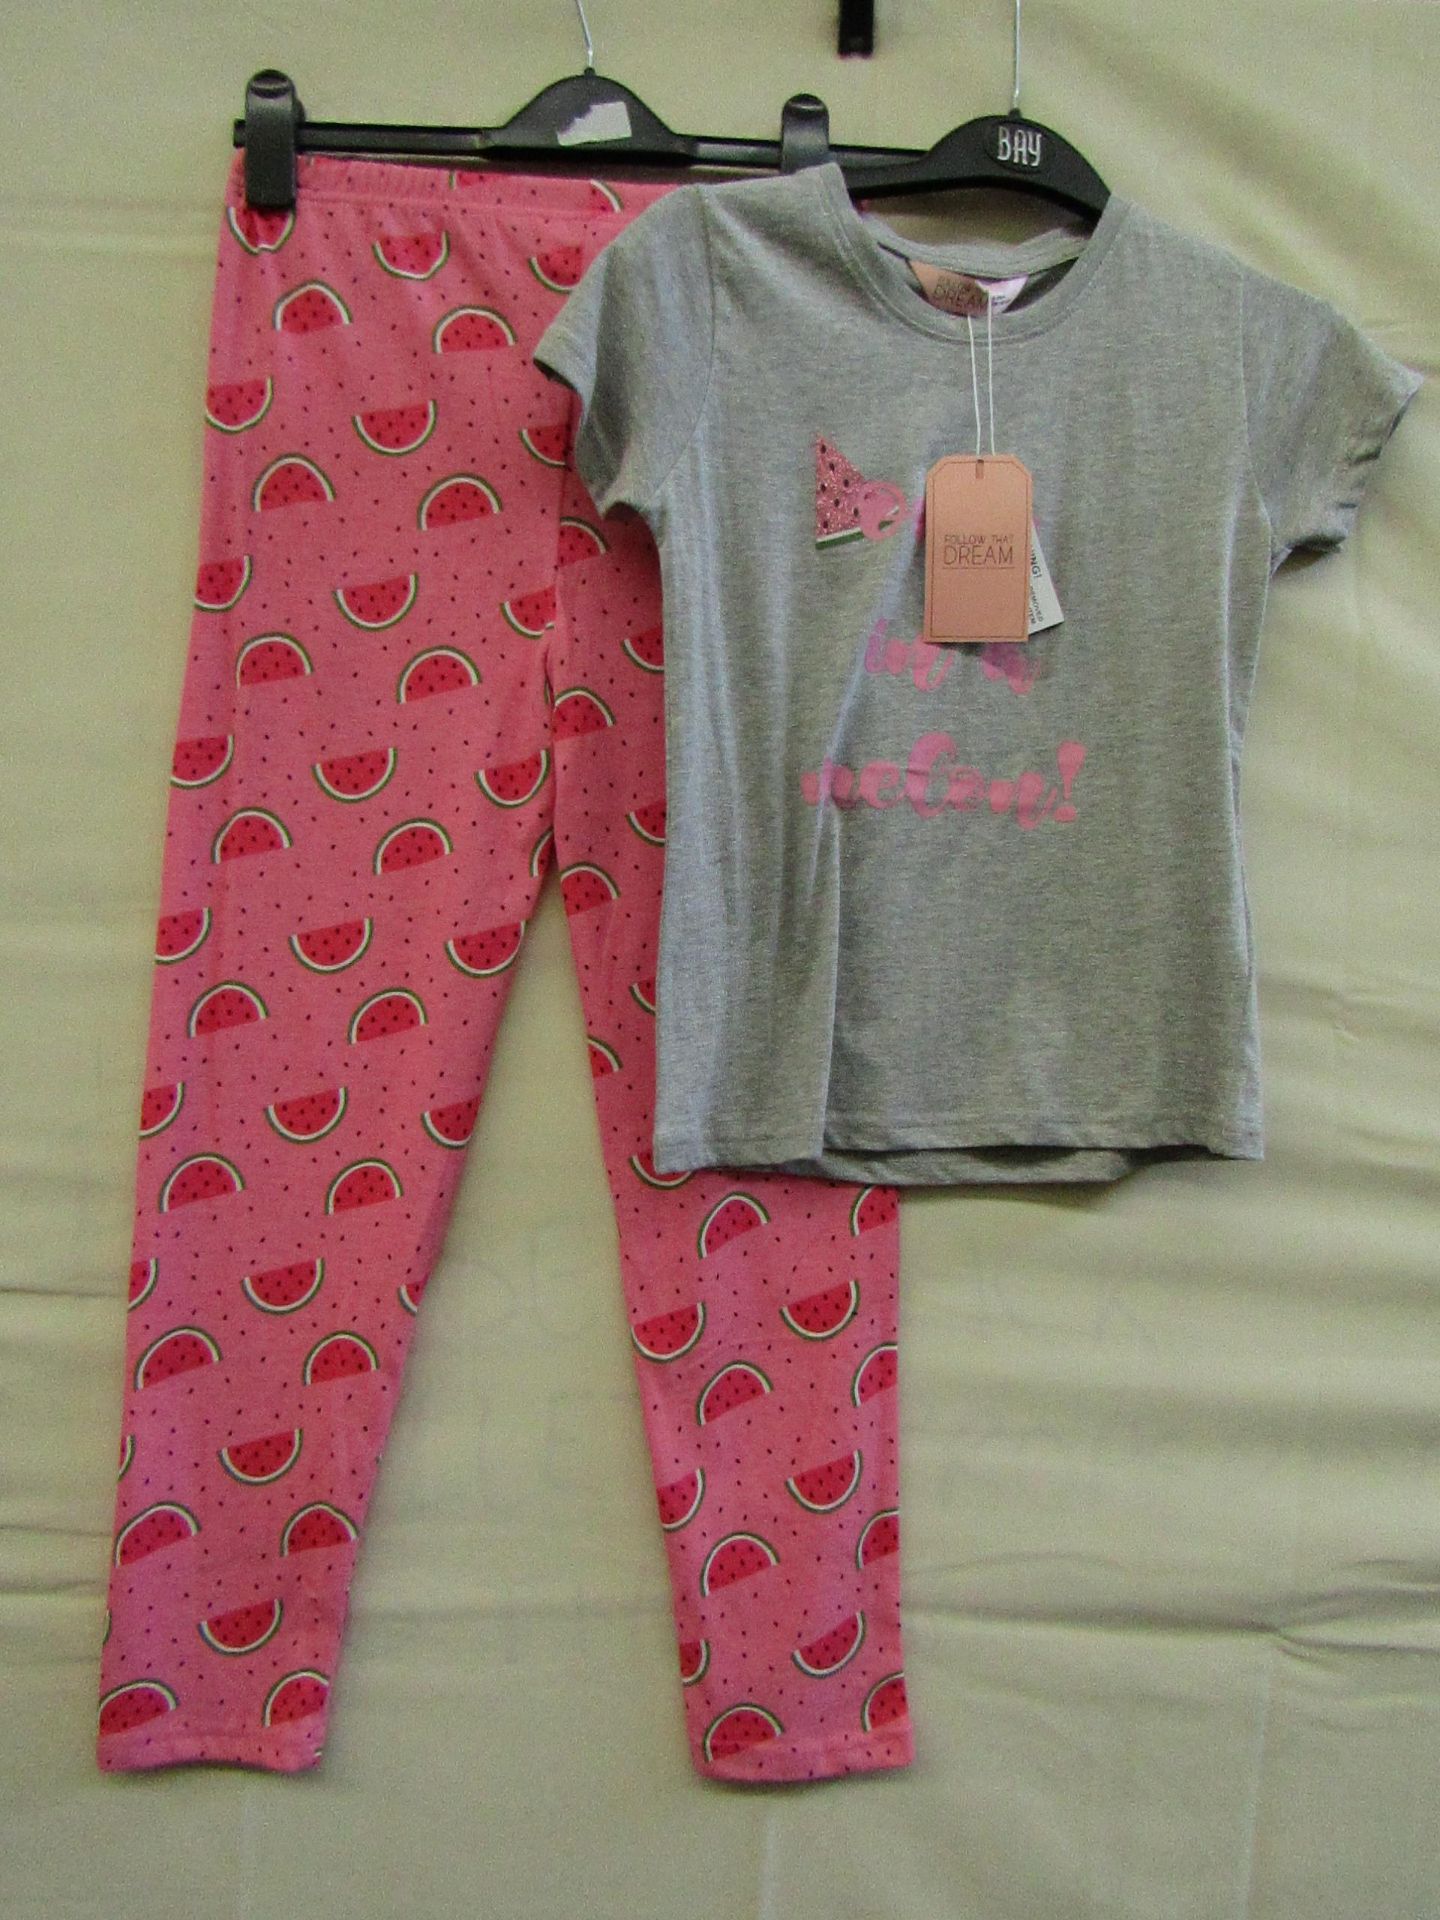 Follow That Dream Girls Jersey Fun Print Top & Leggings Pyjama Set Aged 13 yrs New & Packaged